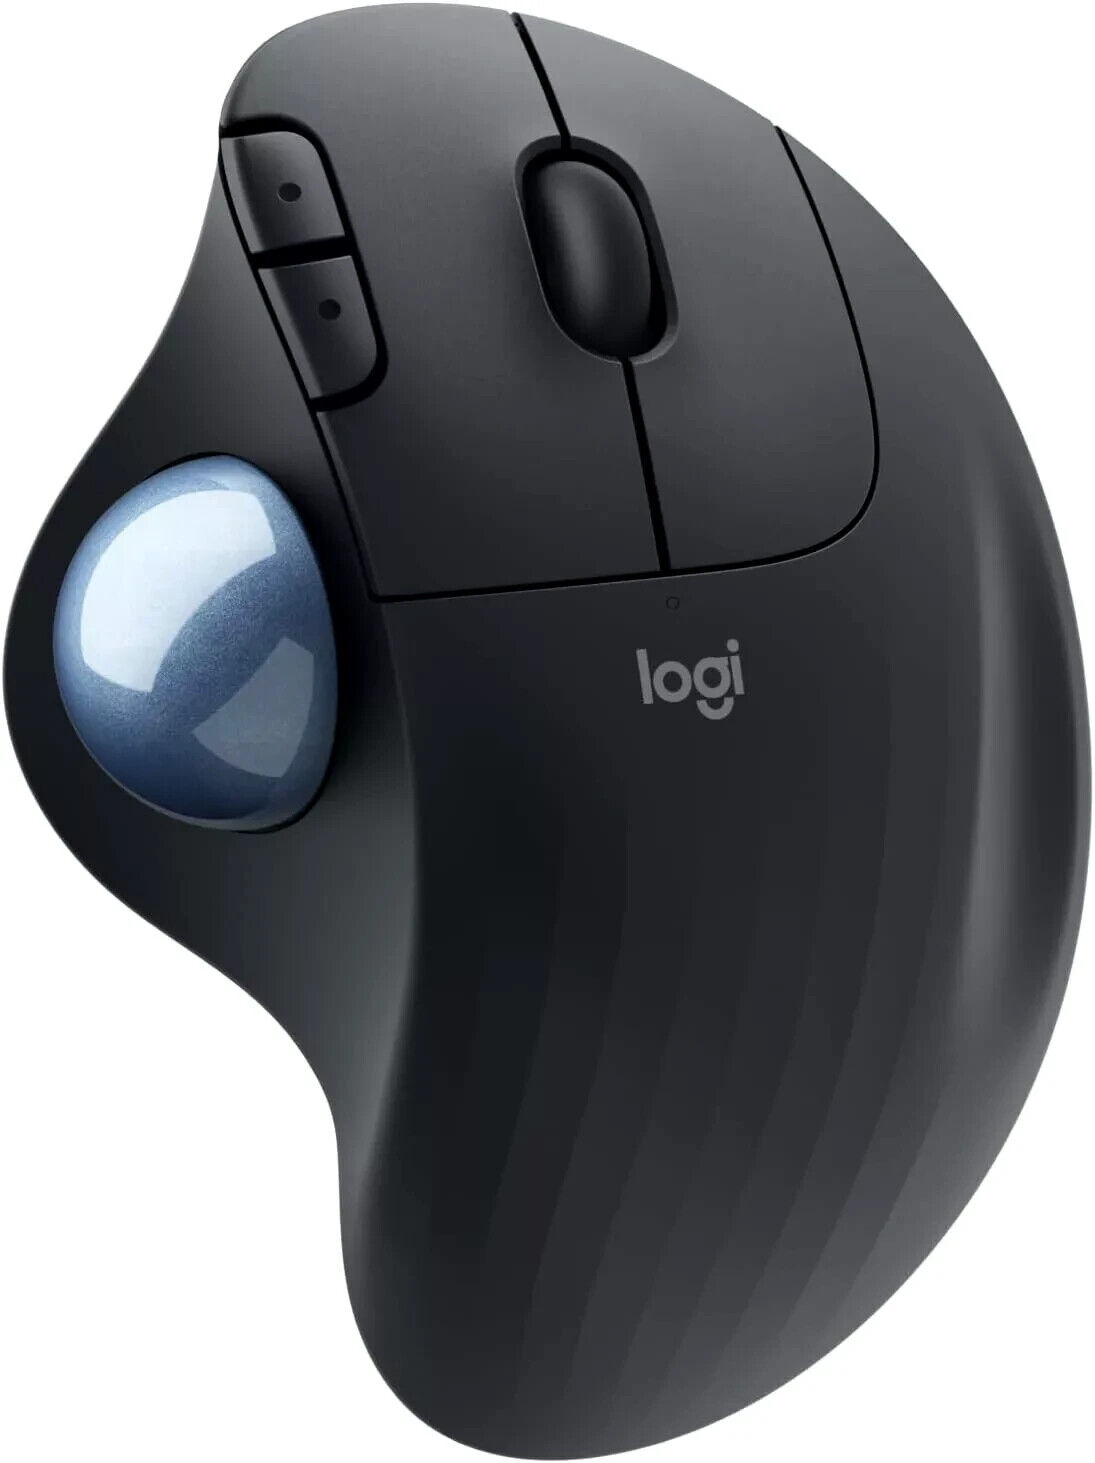 Logitech ERGO M575 Wireless Trackball Mouse BT & USB - Graphite